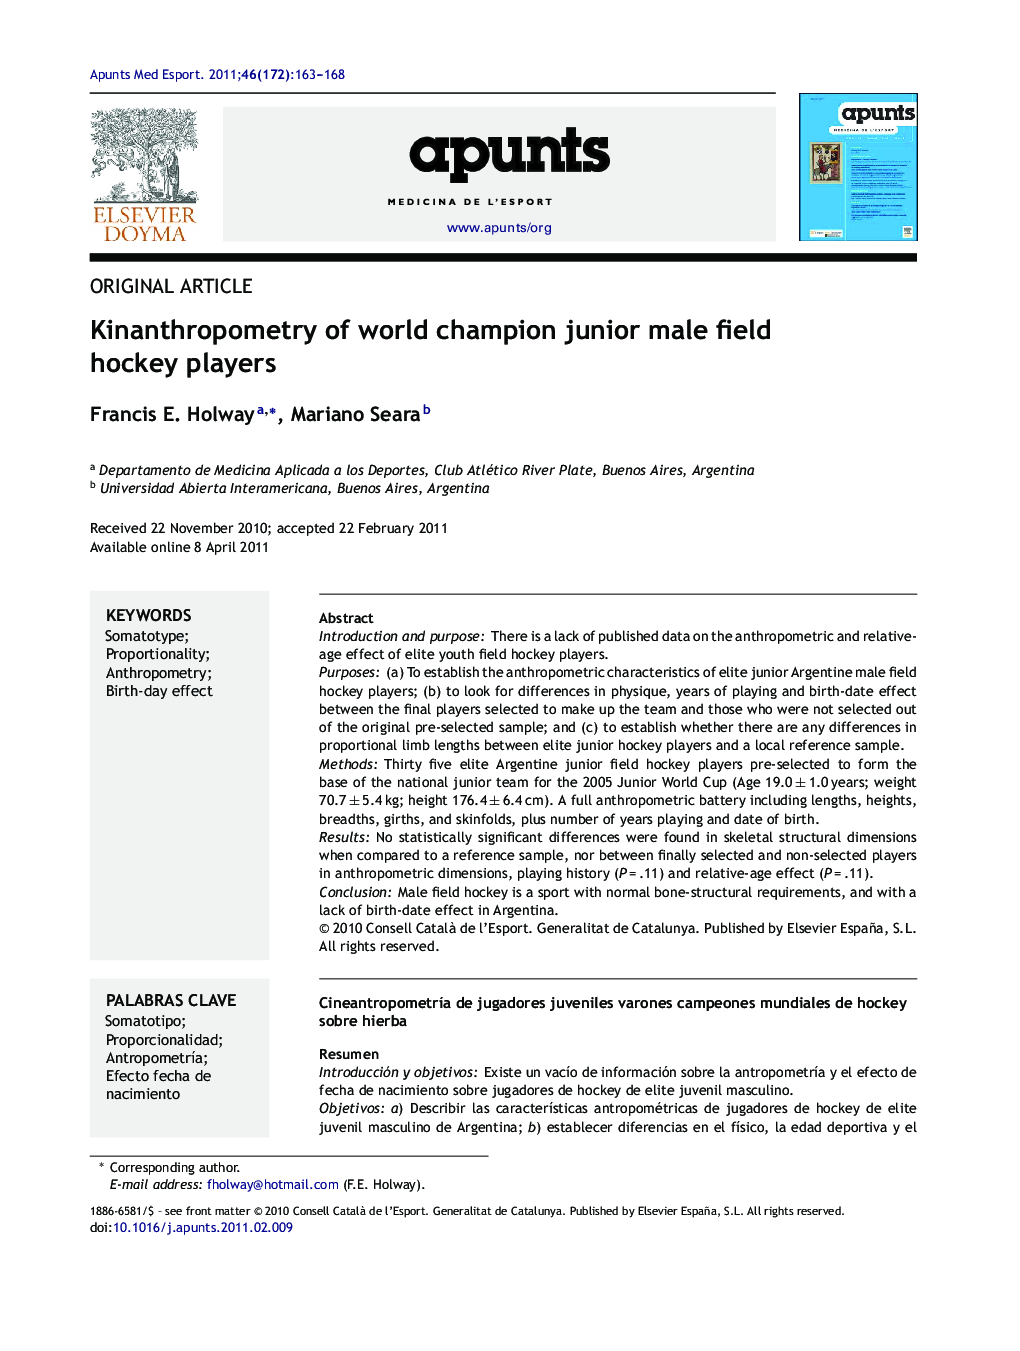 Kinanthropometry of world champion junior male field hockey players